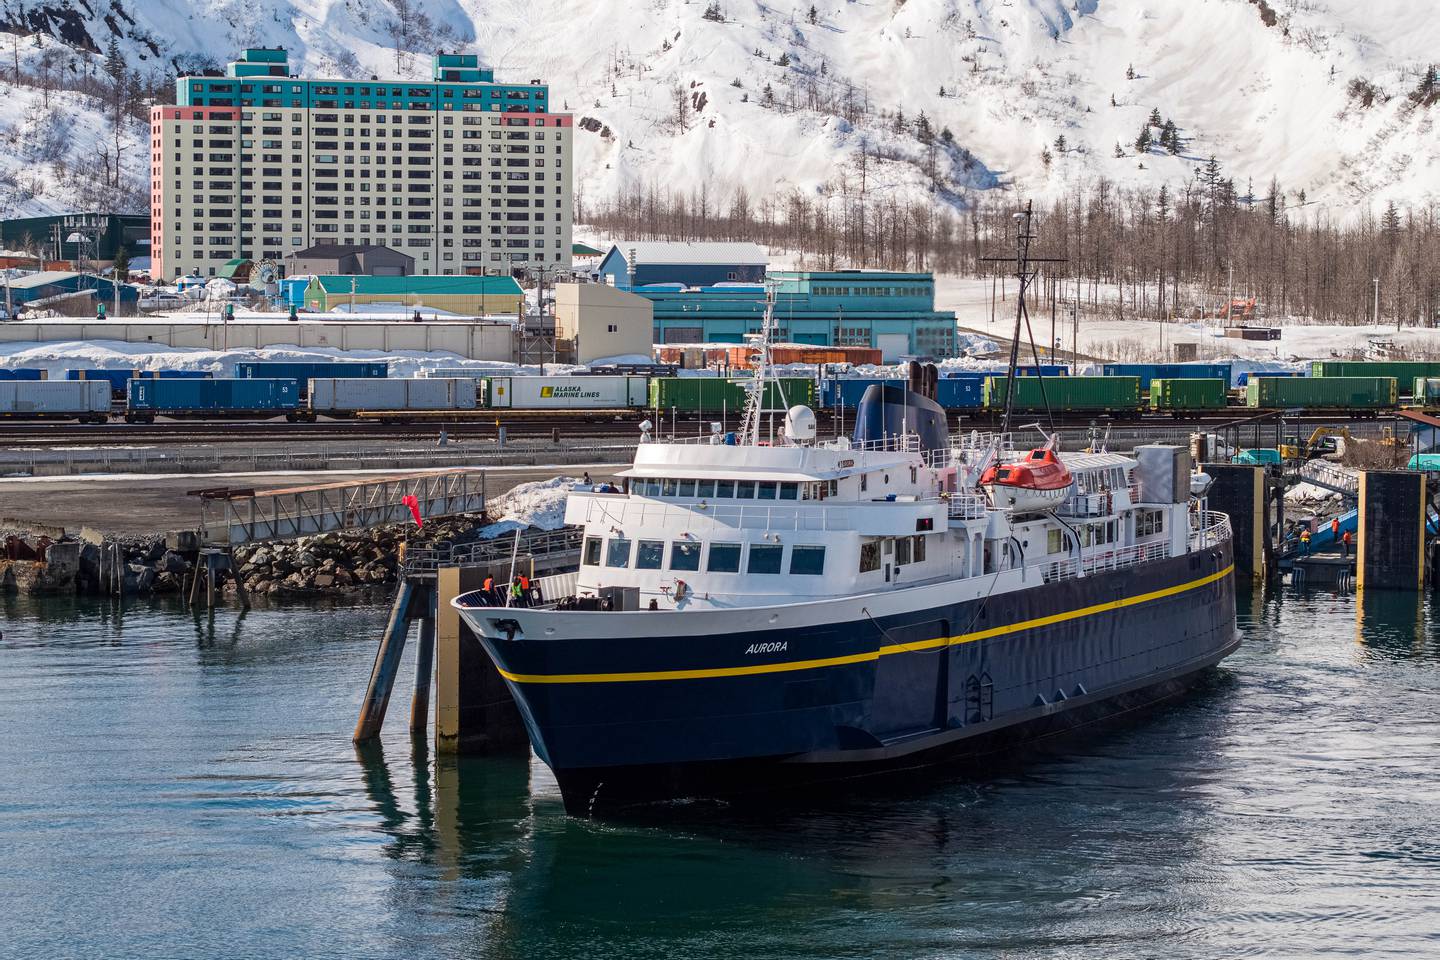 M/V Aurora, MV Aurora, Whittier, alaska marine highway, ferry